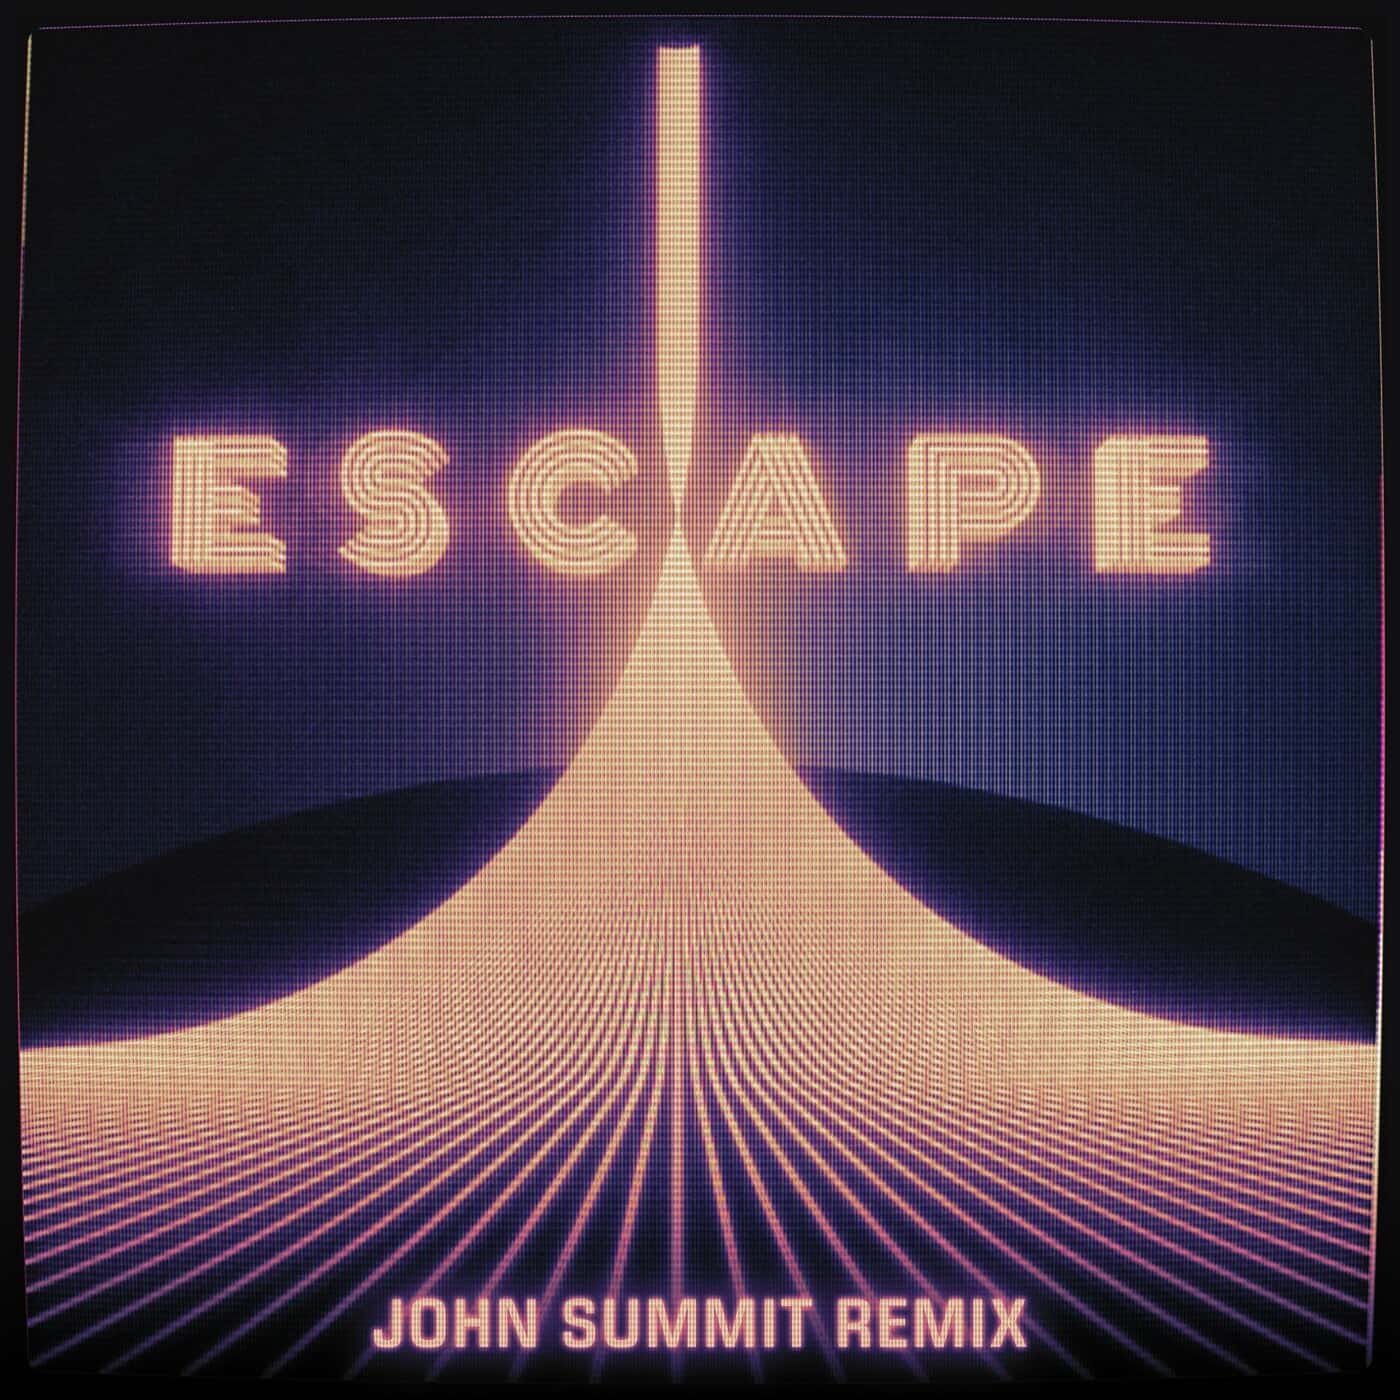 image cover: Kaskade, deadmau5, Kx5 - Escape (John Summit Remix) (Extended Mix) feat. Hayla / MAU50461R1BP